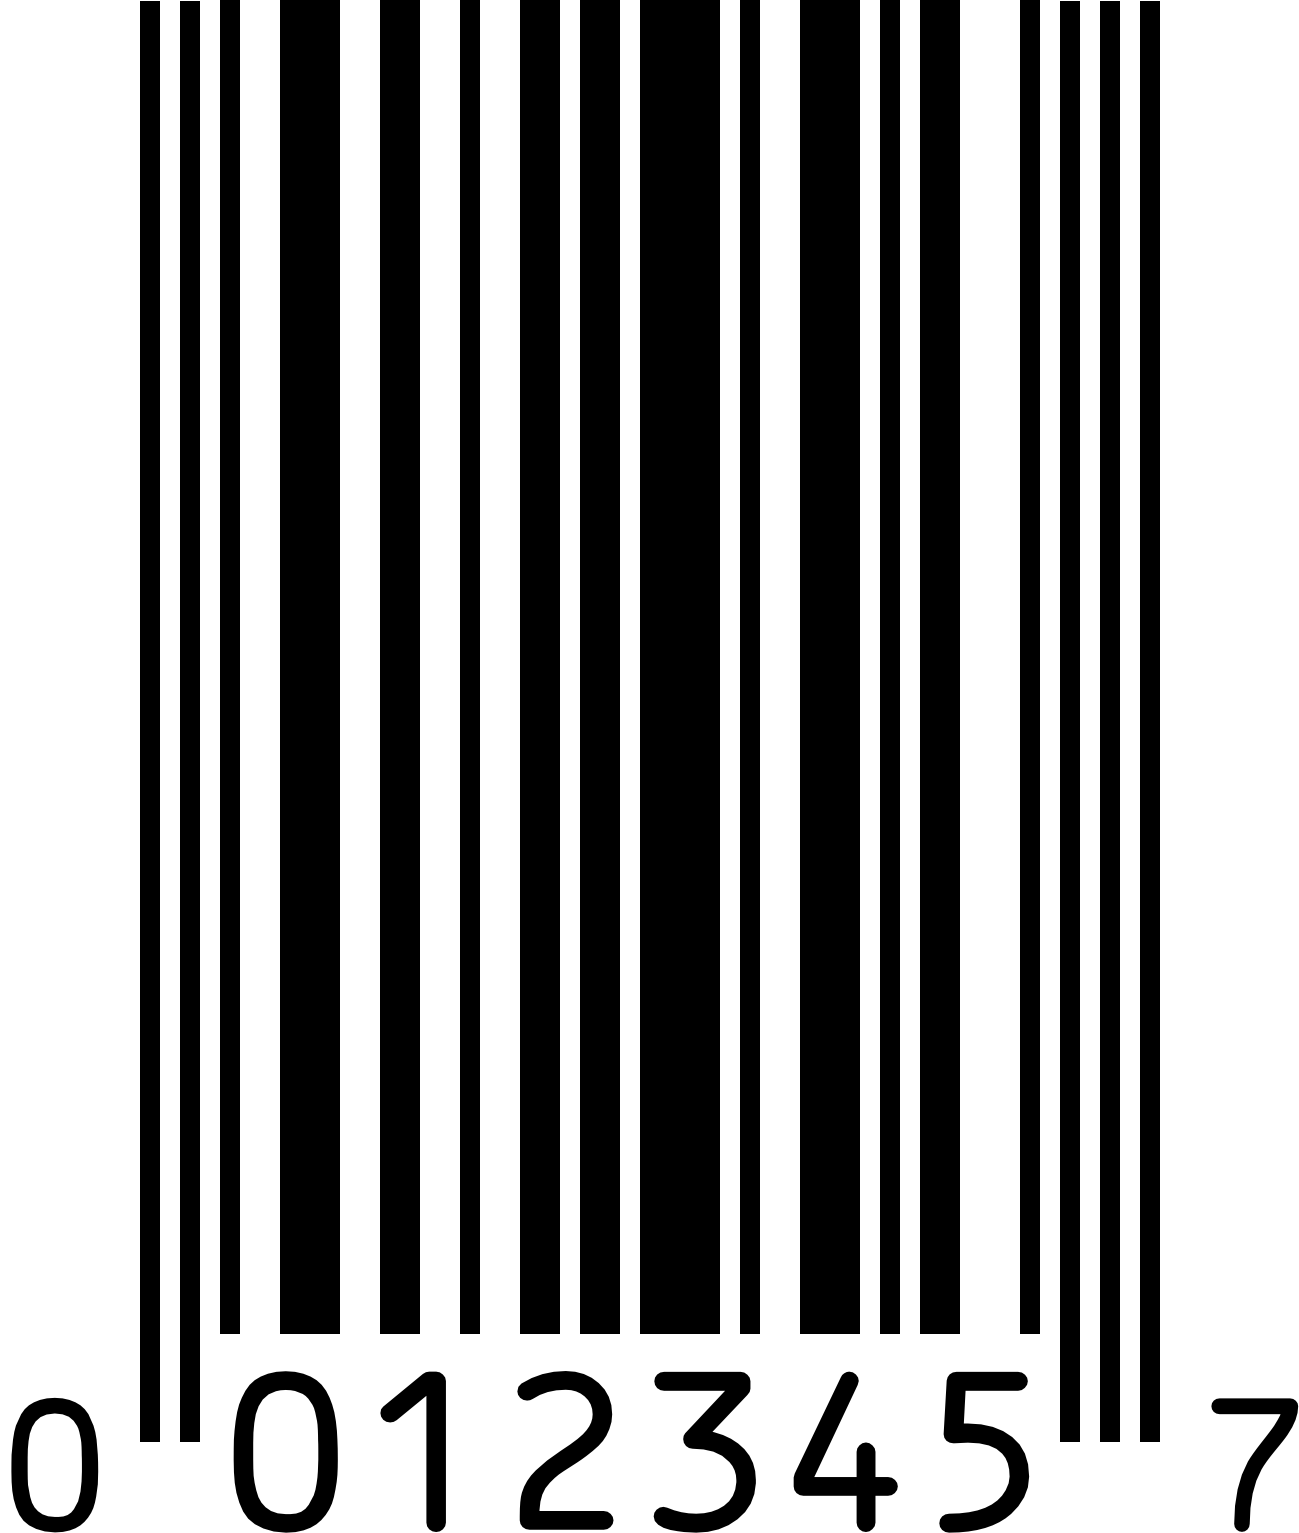 Example UPC-E Barcode